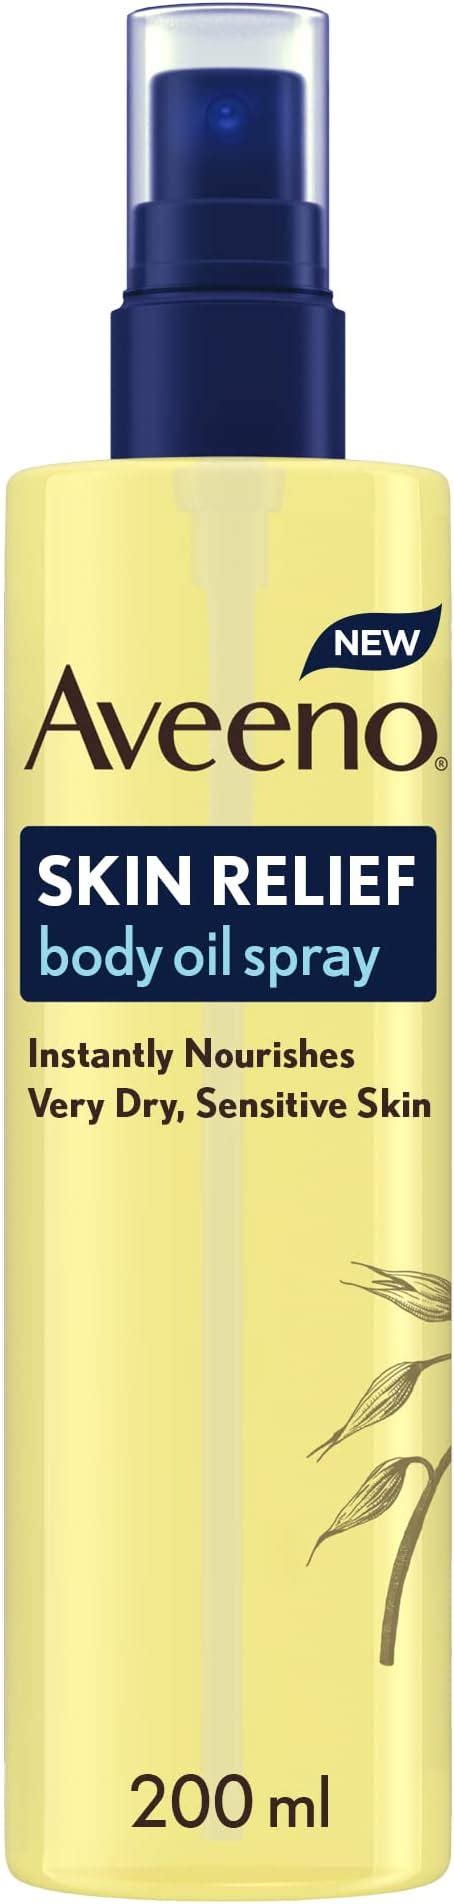 Aveeno Skin Relief Body Oil Spray 200ml Uk Baby Products